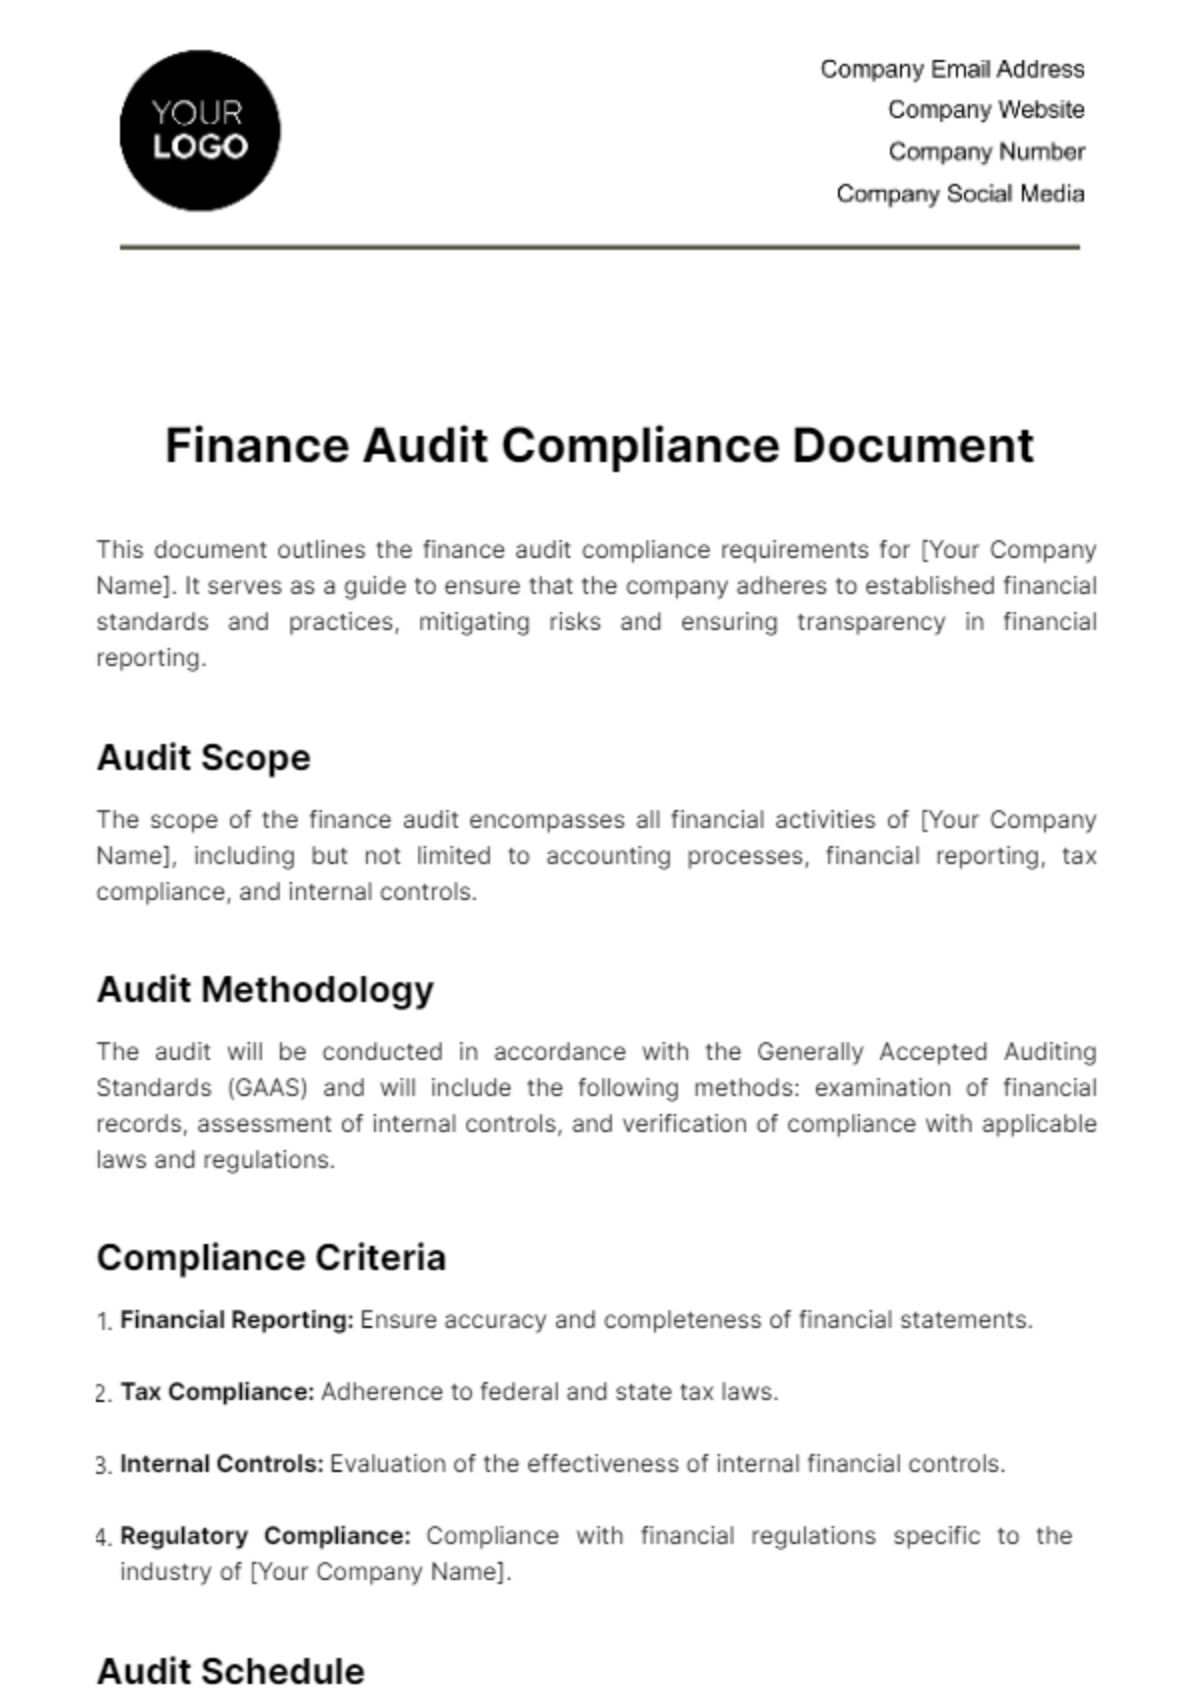 Free Finance Audit Compliance Document Template